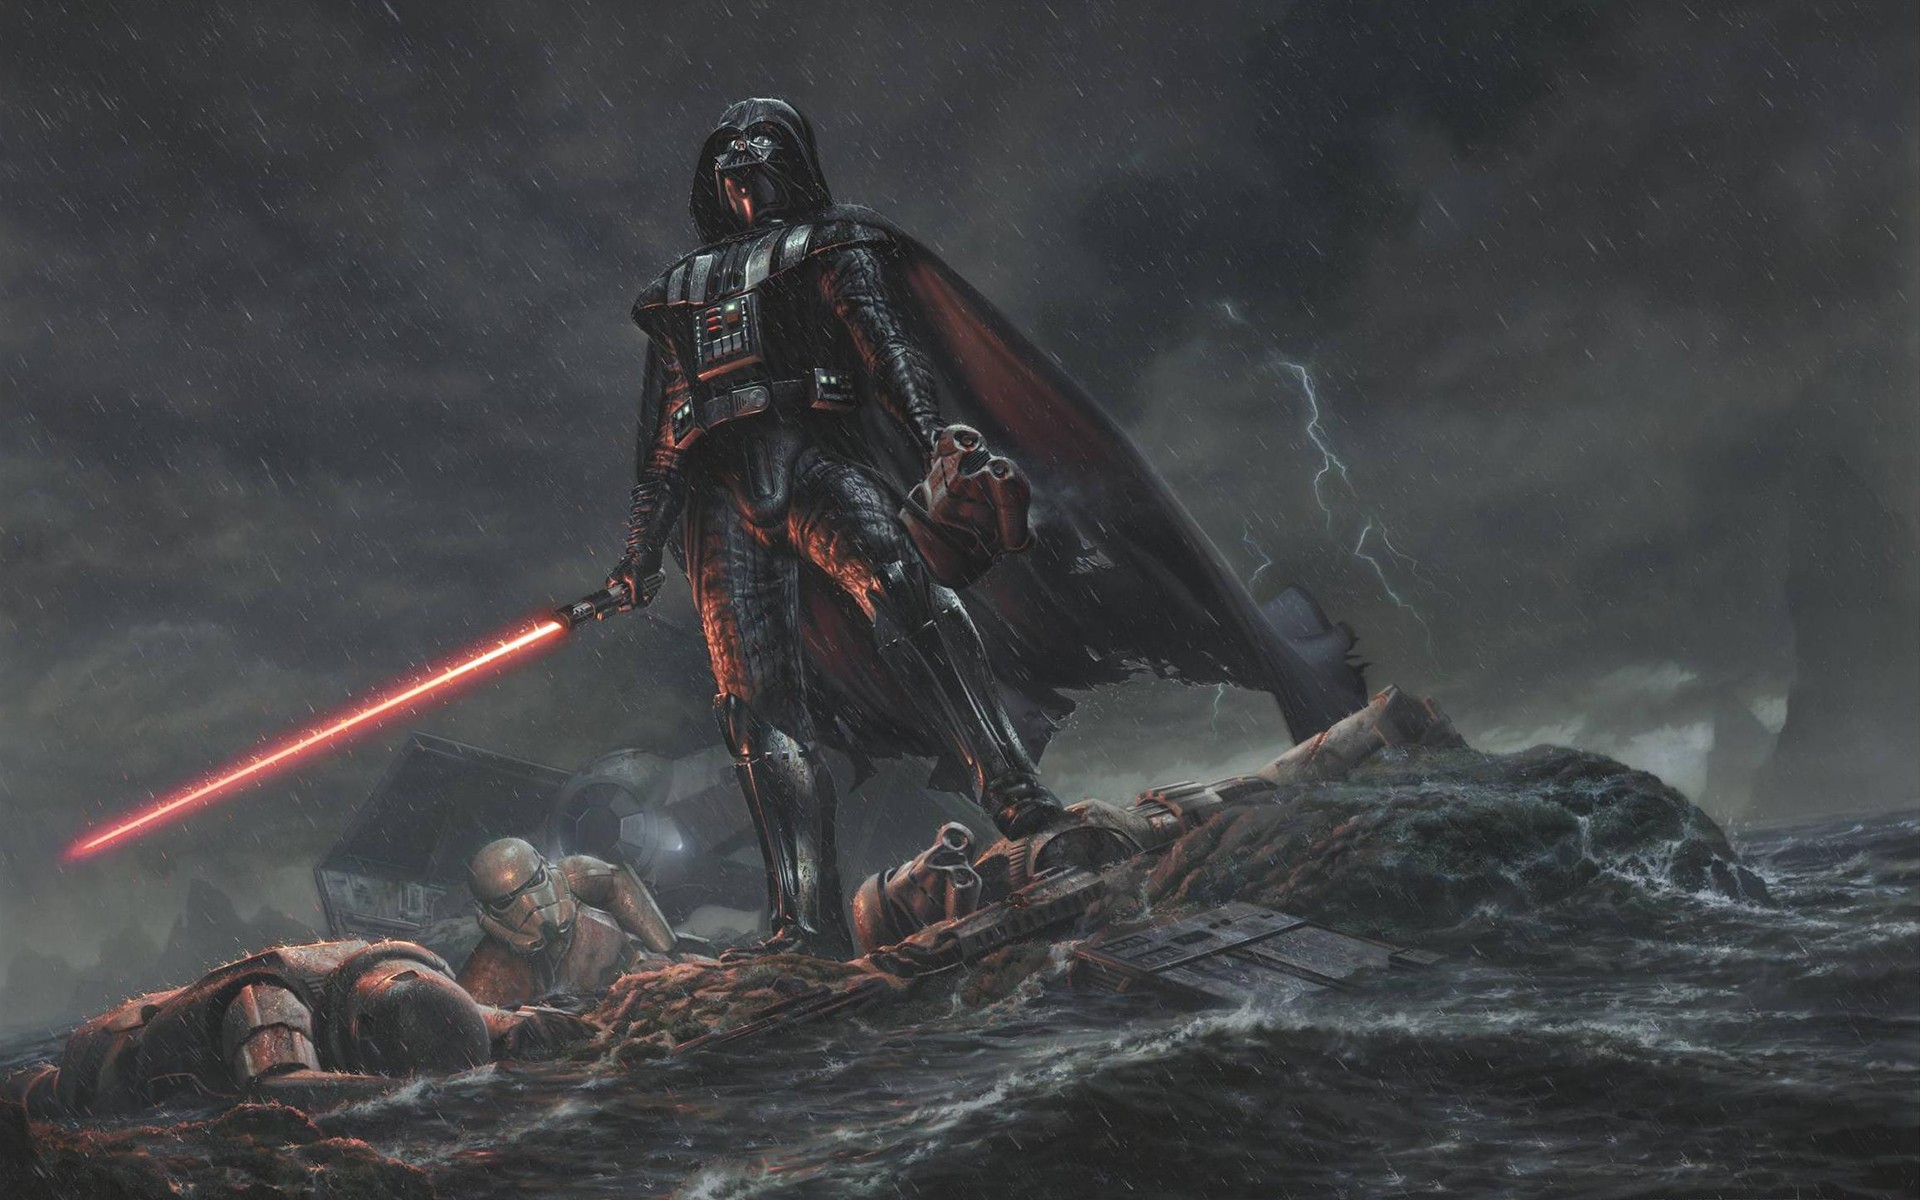 General 1920x1200 digital art movies Star Wars drawing Darth Vader Star Wars Villains lightning rain standing science fiction